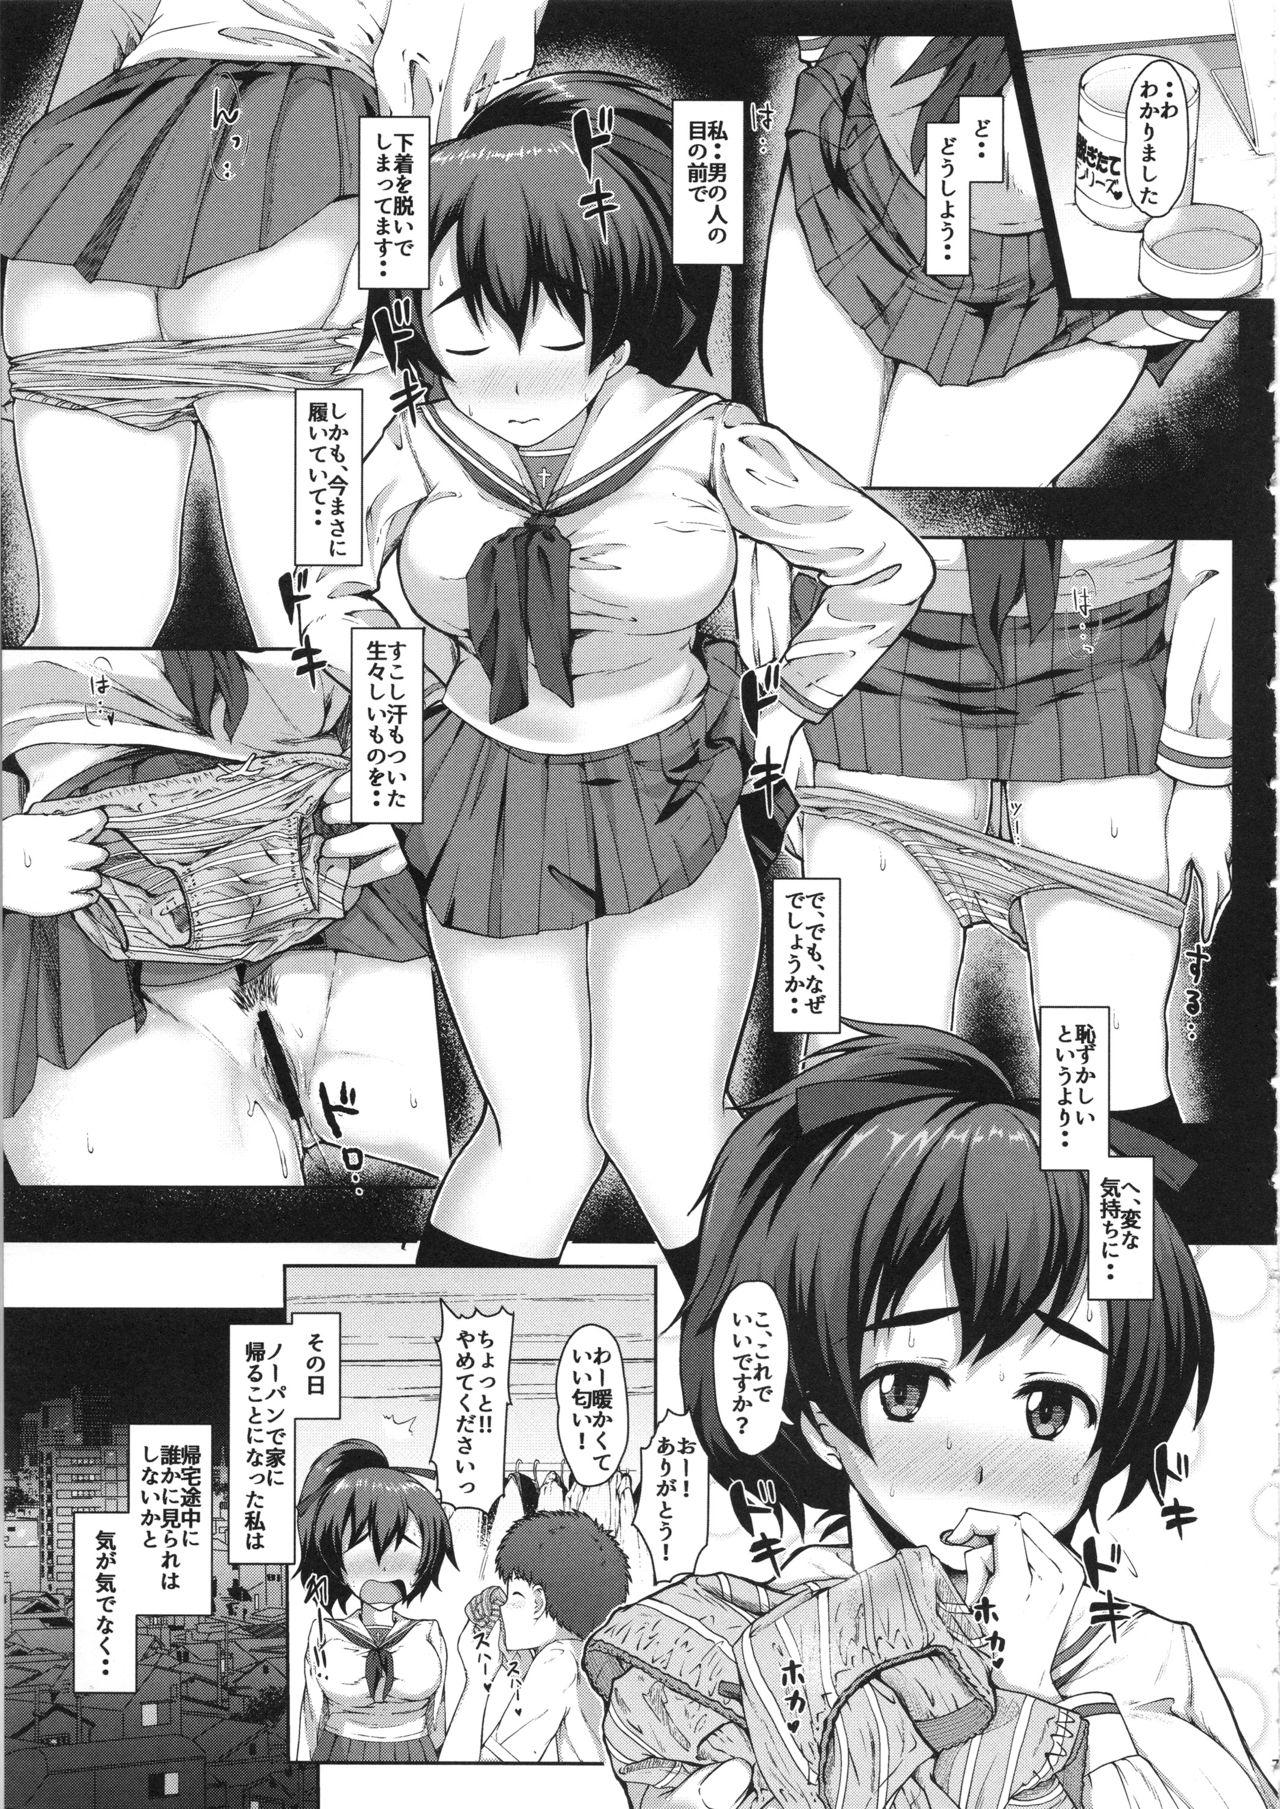 Hardcorend Yuzu-chan no Renkinjutsu - Girls und panzer Egypt - Page 6